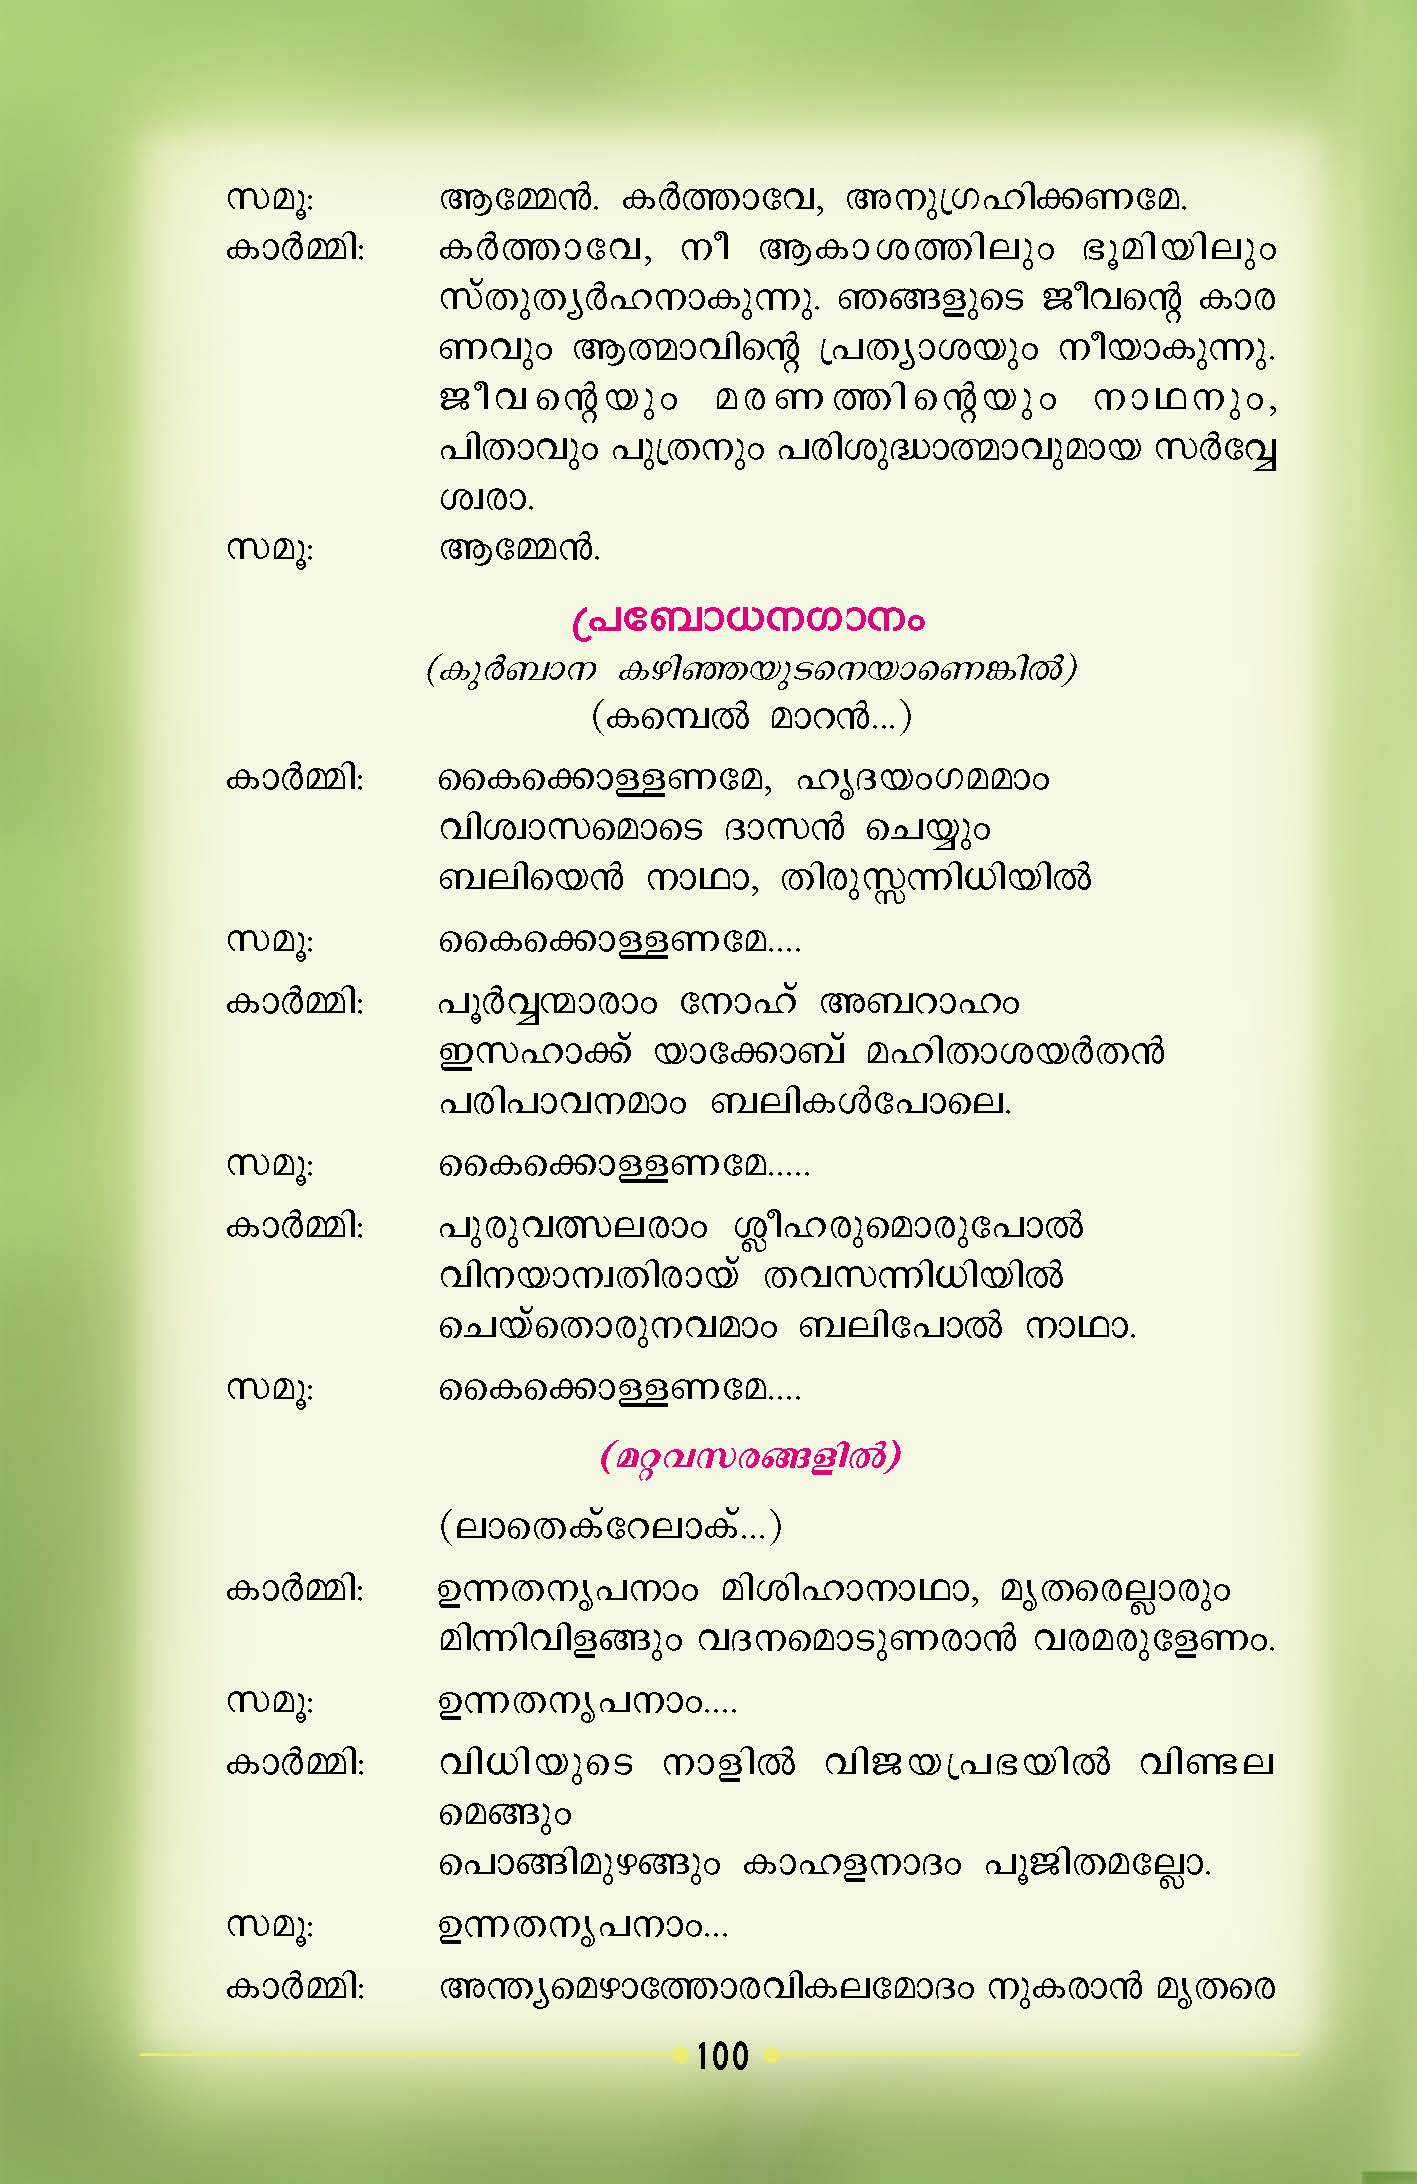 Cheriya Oppesu Office for the Dead (Malayalam) 03